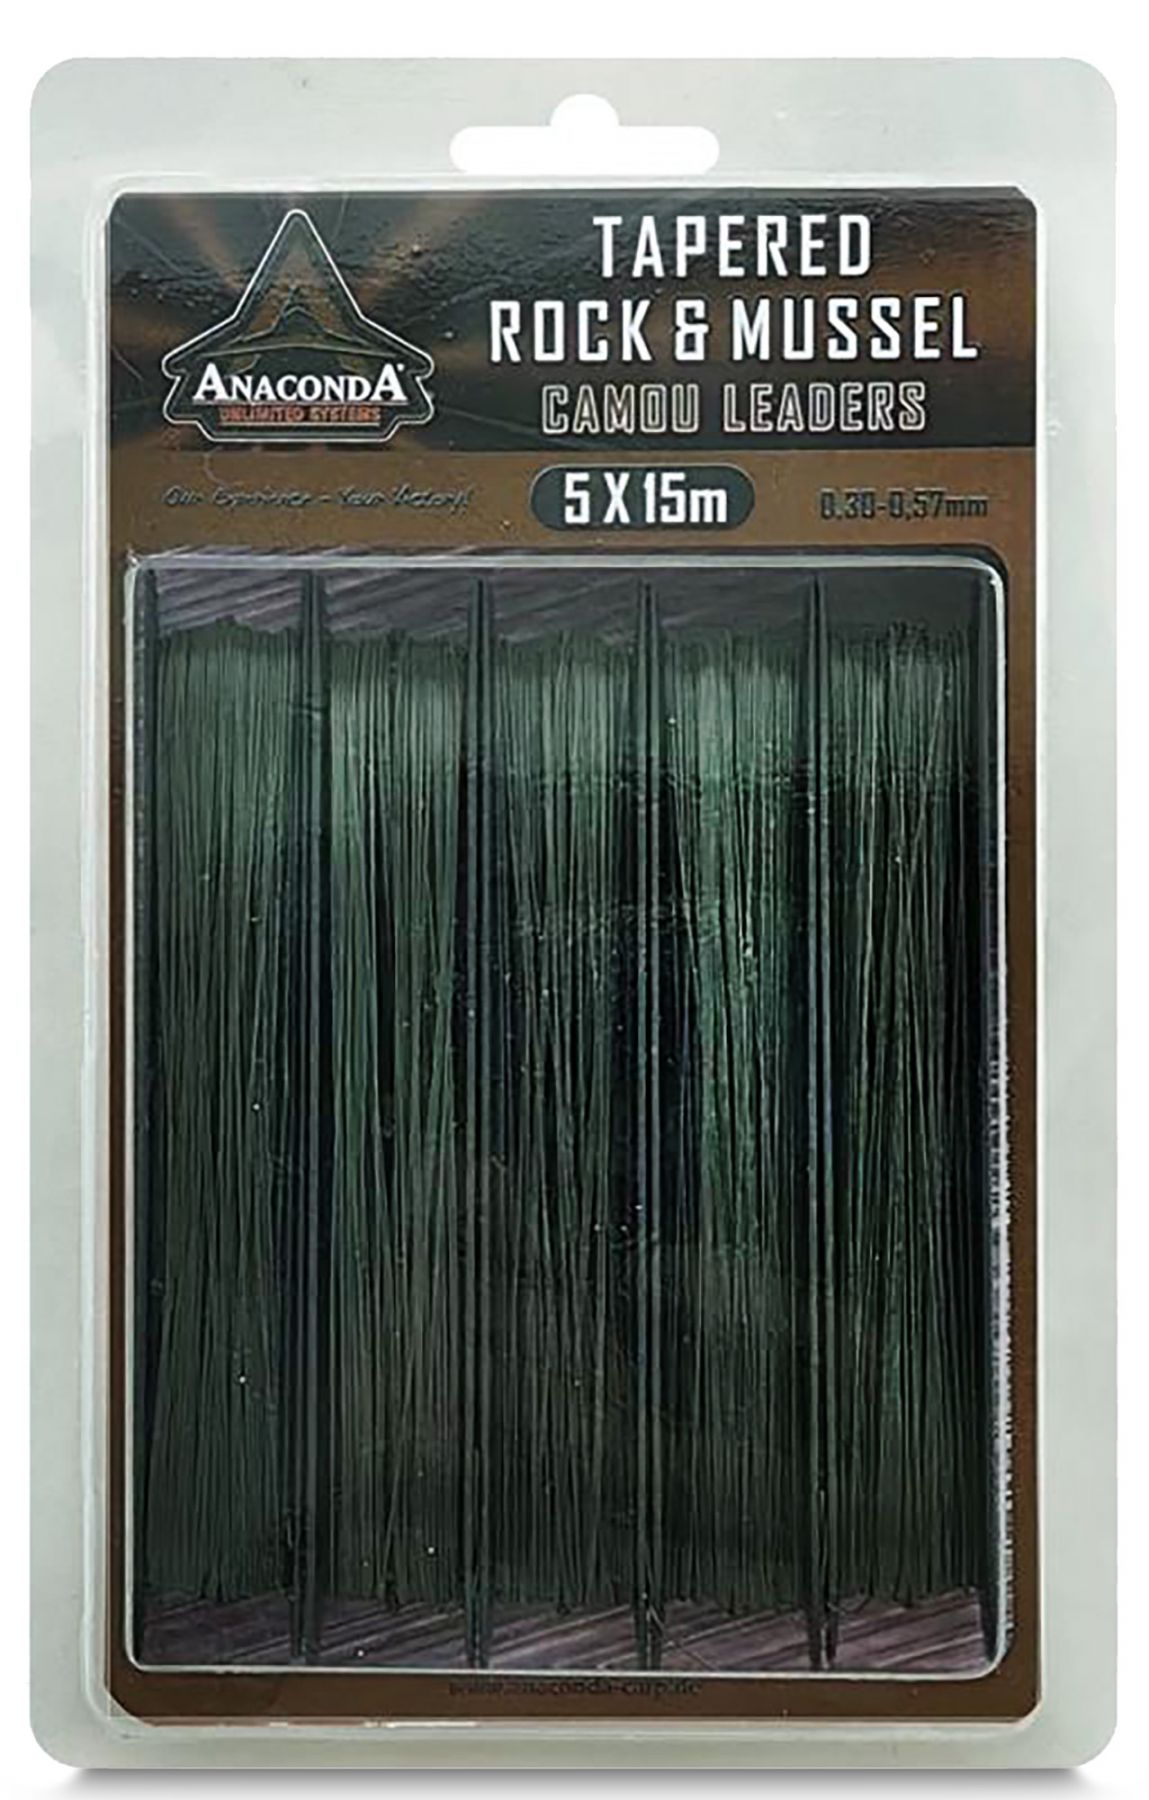 Anaconda Tapered Rock & Mussel Camou Leaders 15m (5 sztuk)